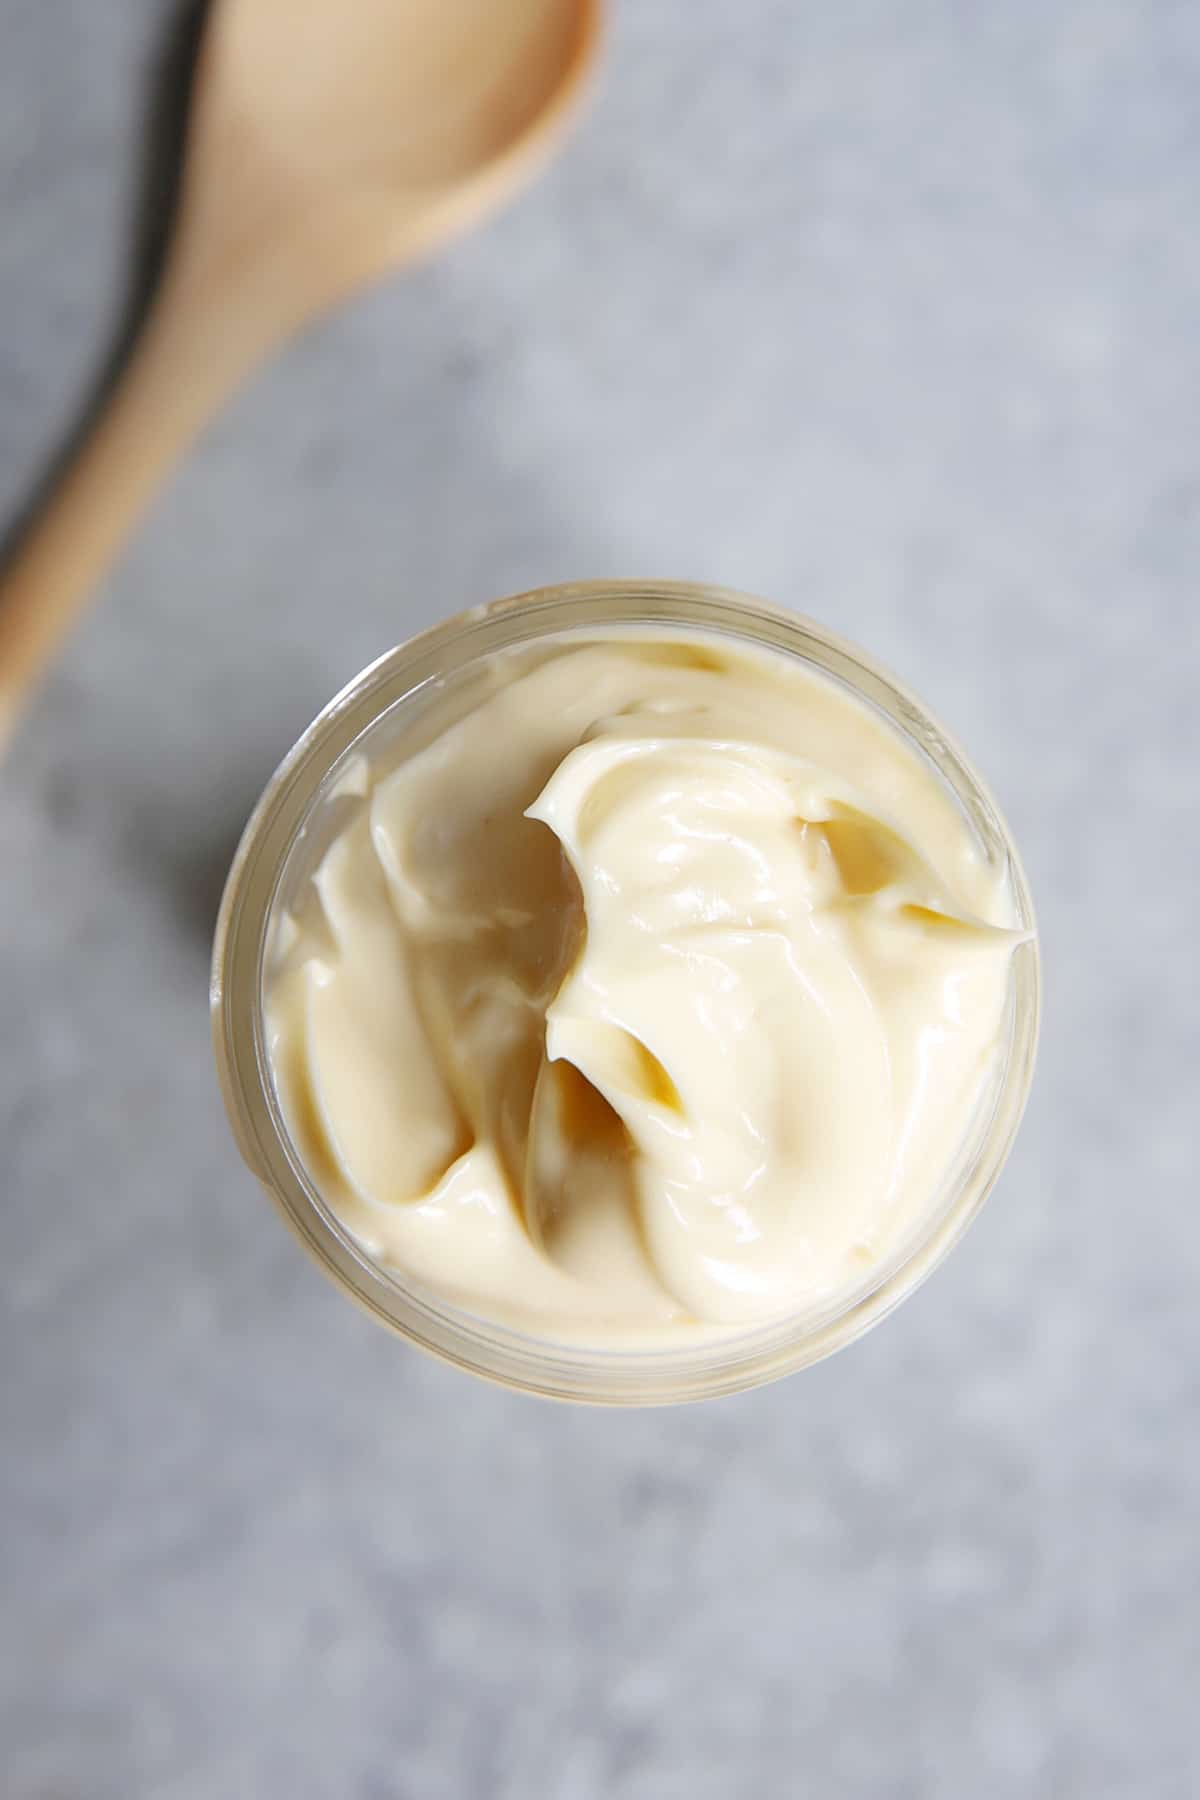 Perfectly creamy paleo mayo recipe